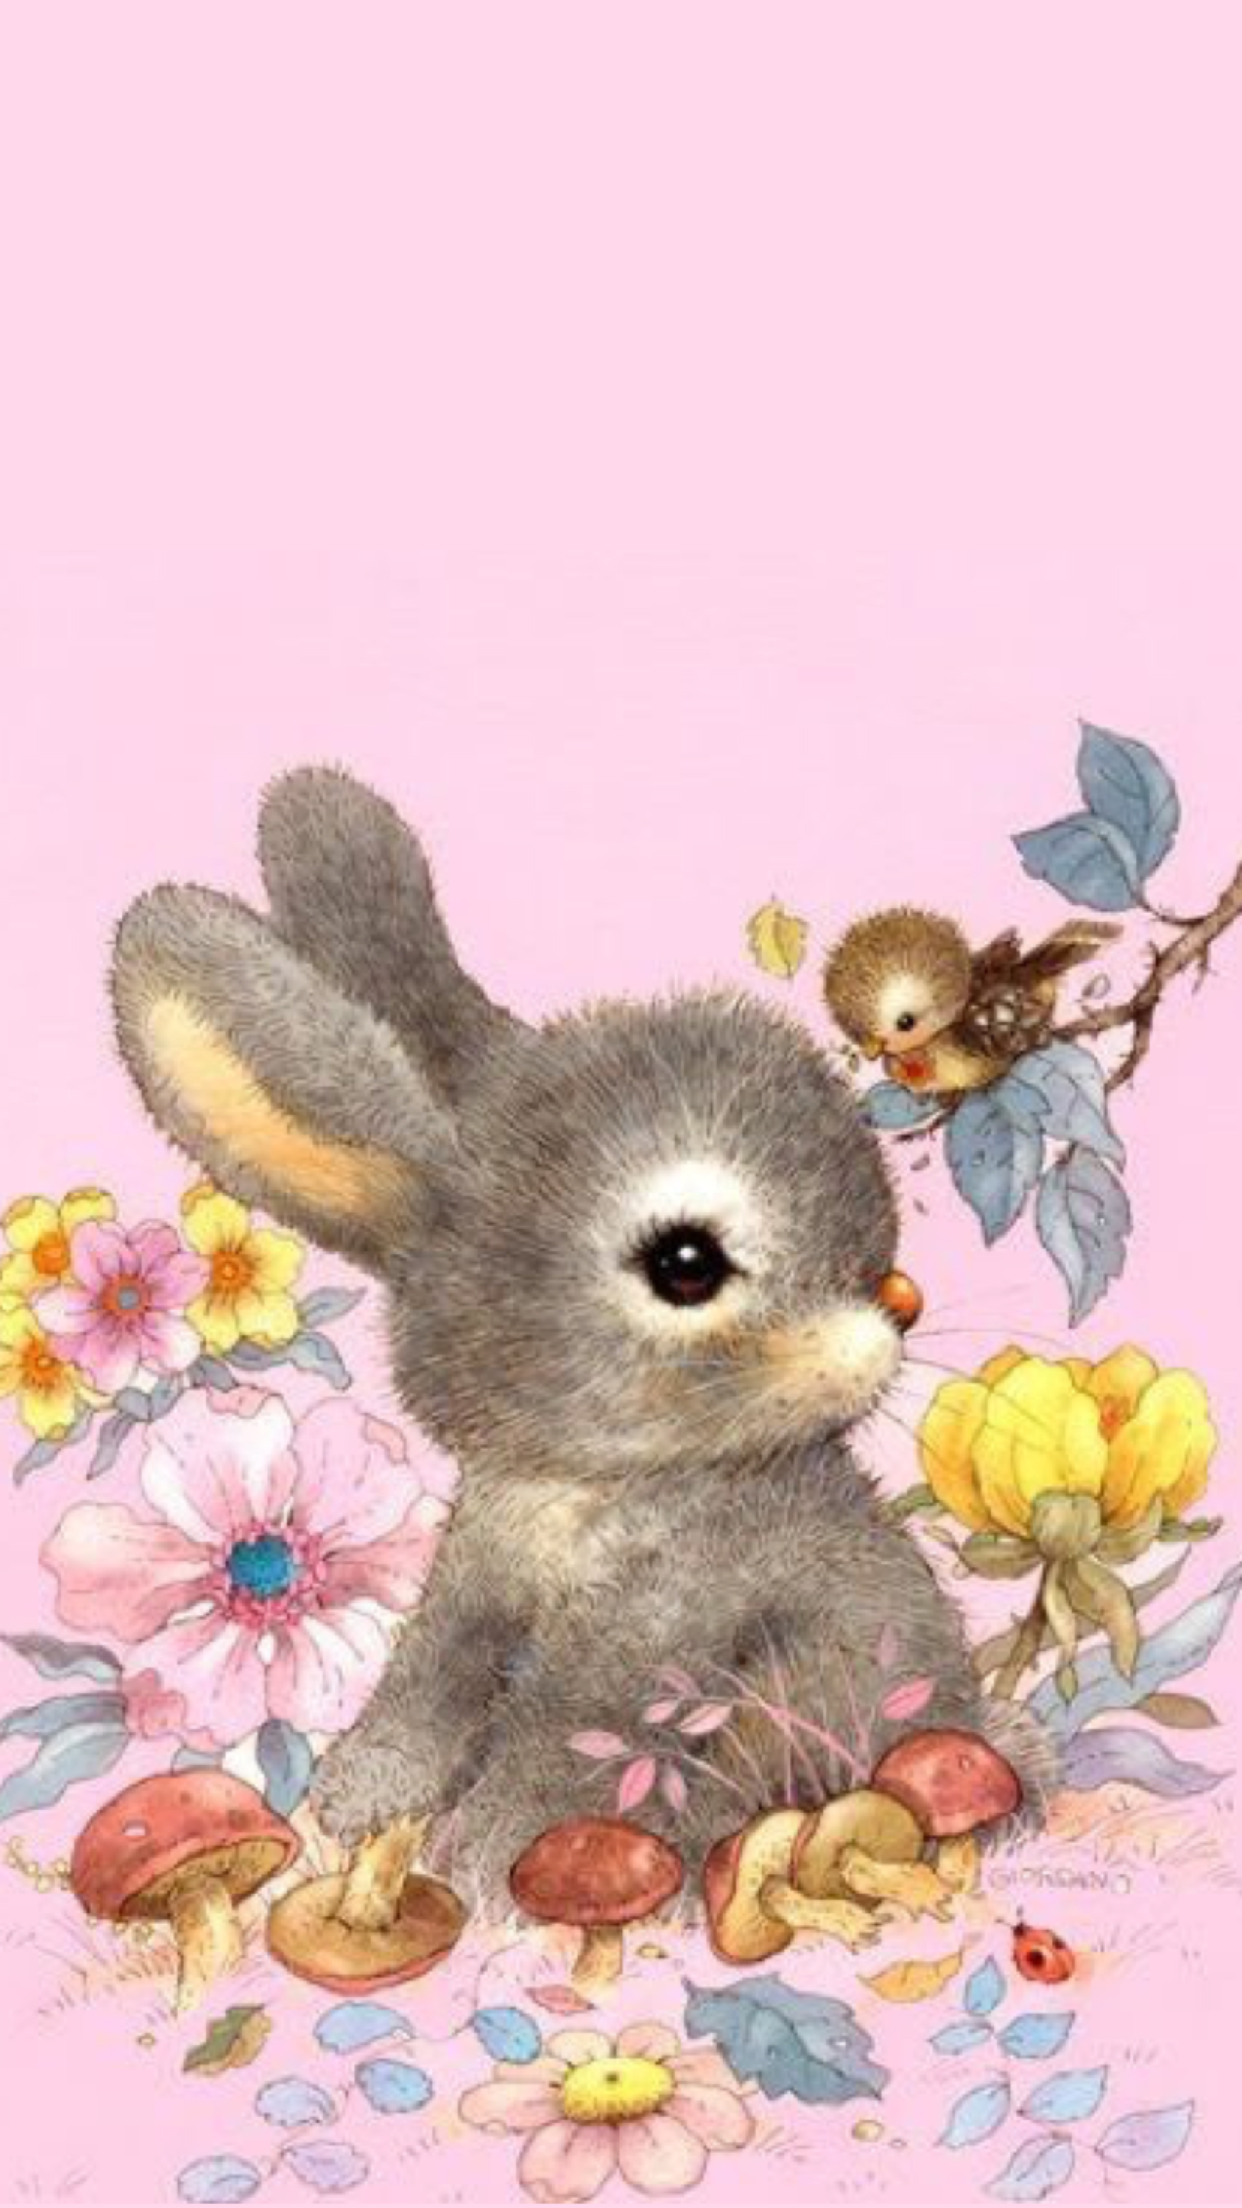 Wallpaper. Easter wallpaper, Teddy bear wallpaper, Rabbit wallpaper